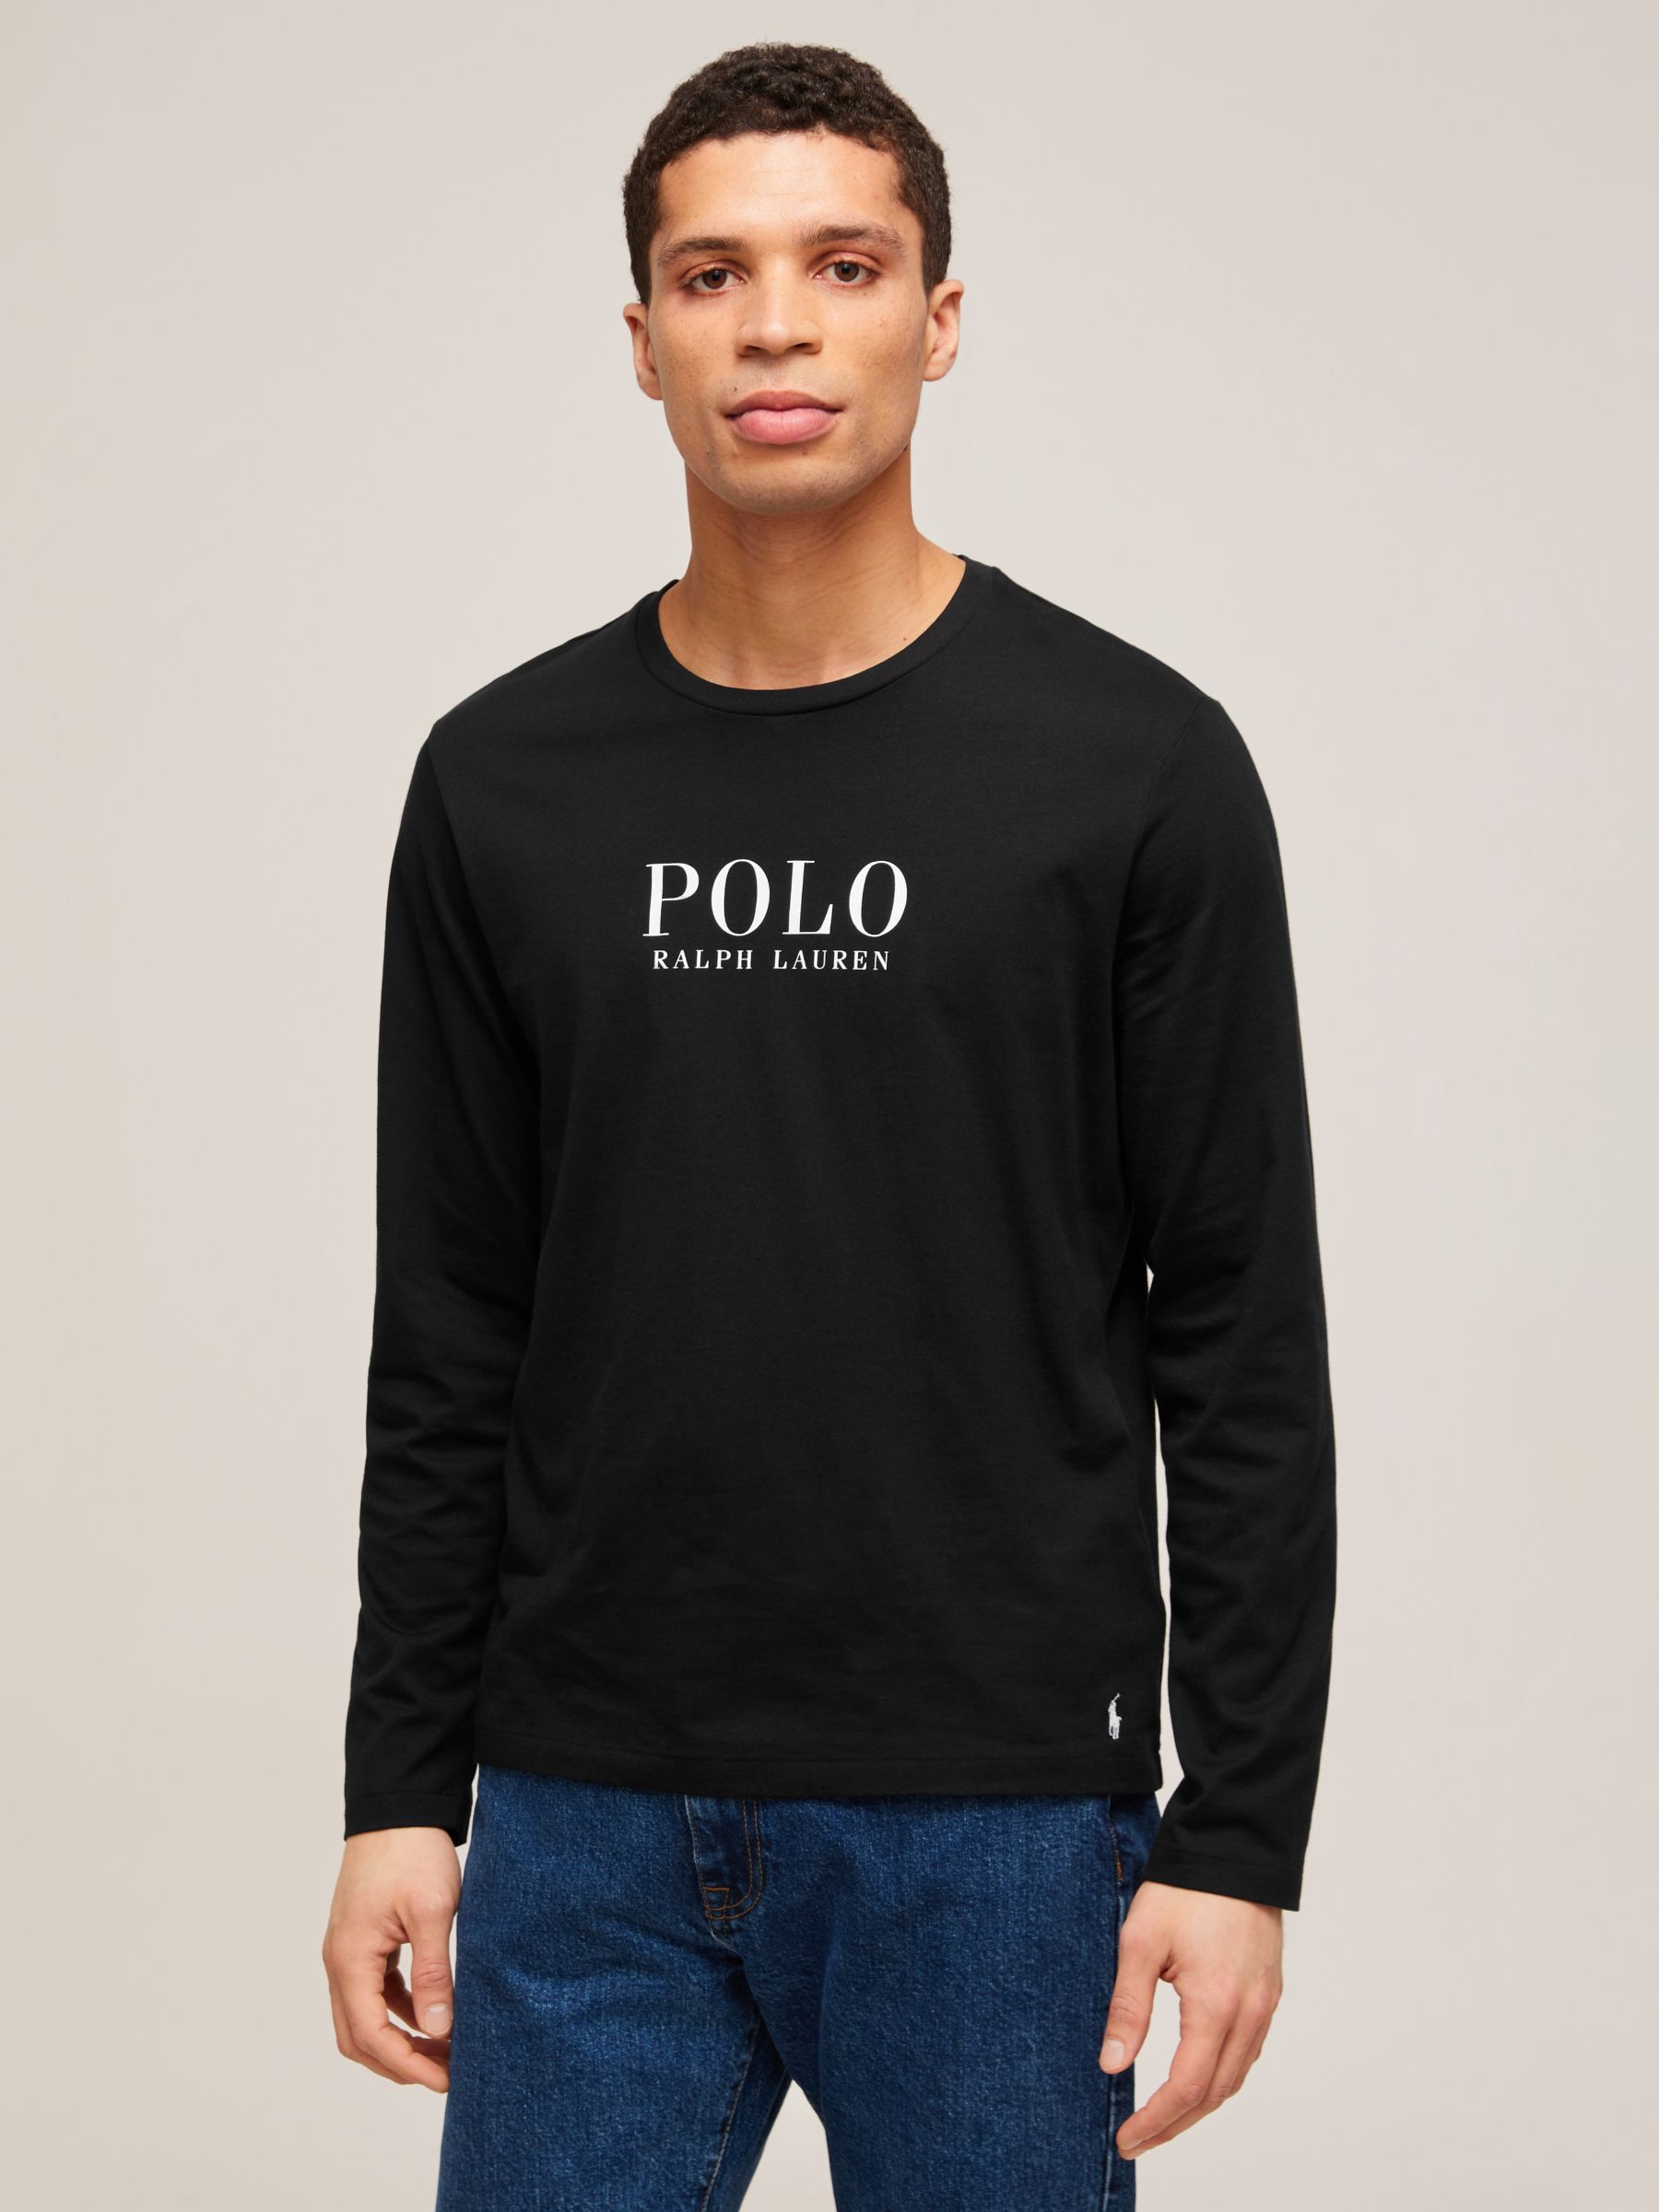 Polo Ralph Lauren Cotton Crew Neck Long Sleeve Lounge Top, Black